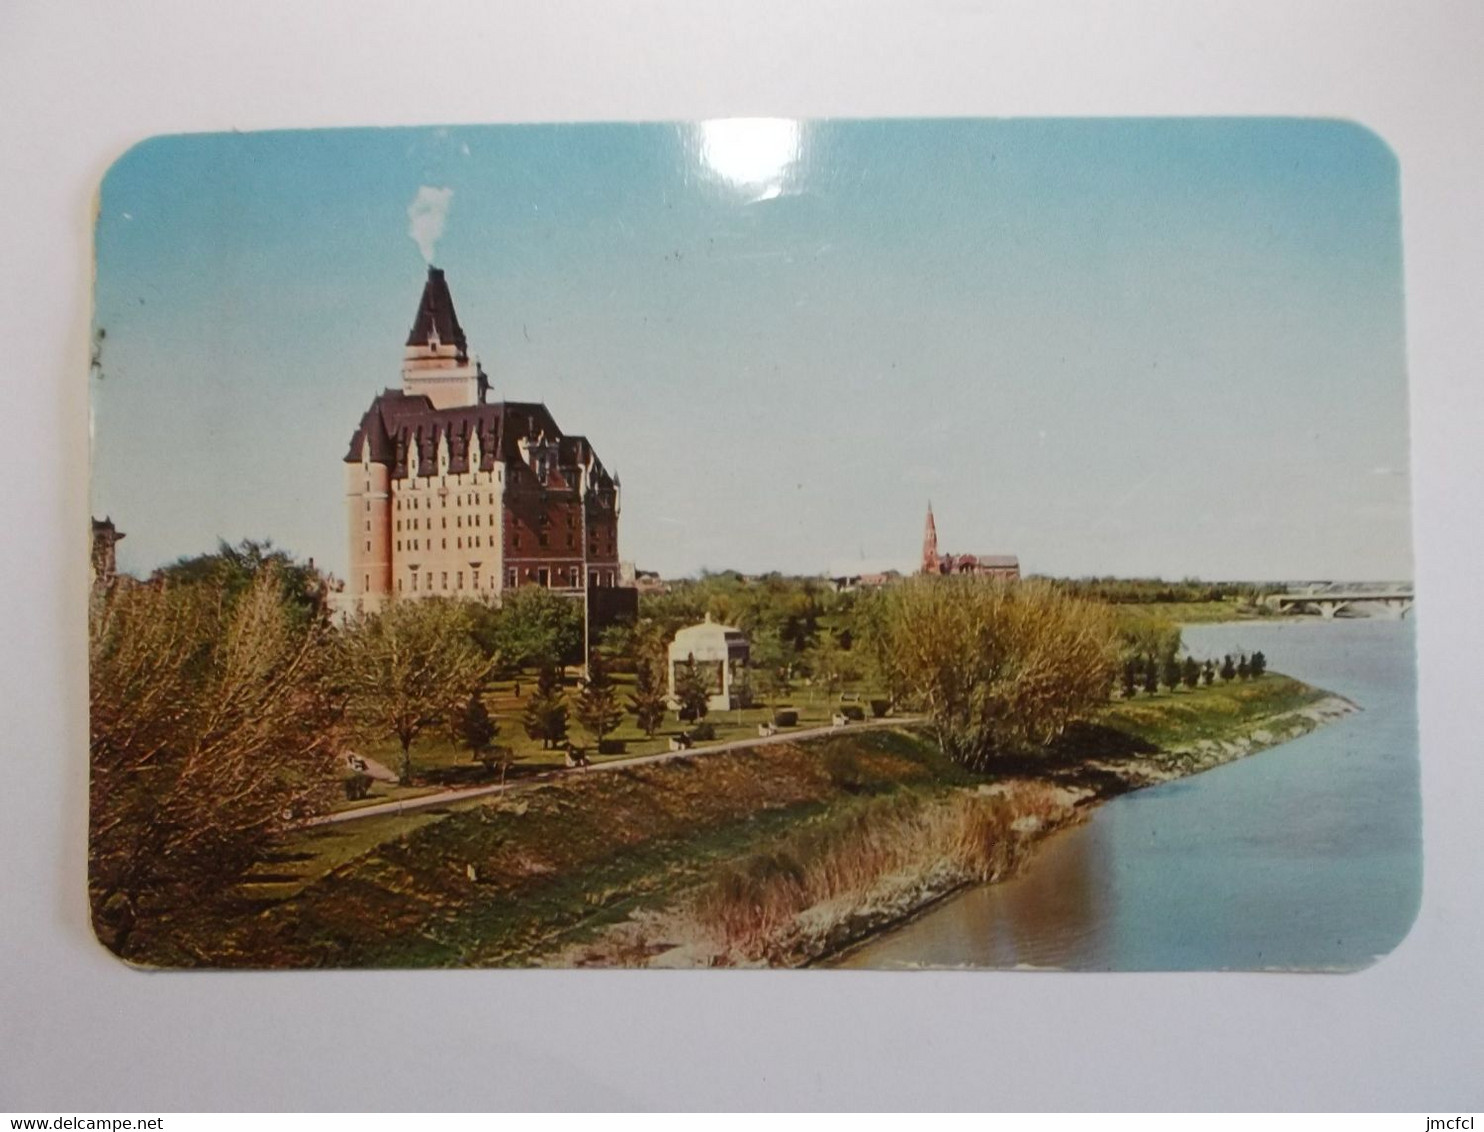 The Bessborough Hotel On The Banks Of The South Saskchewan River - Saskatoon